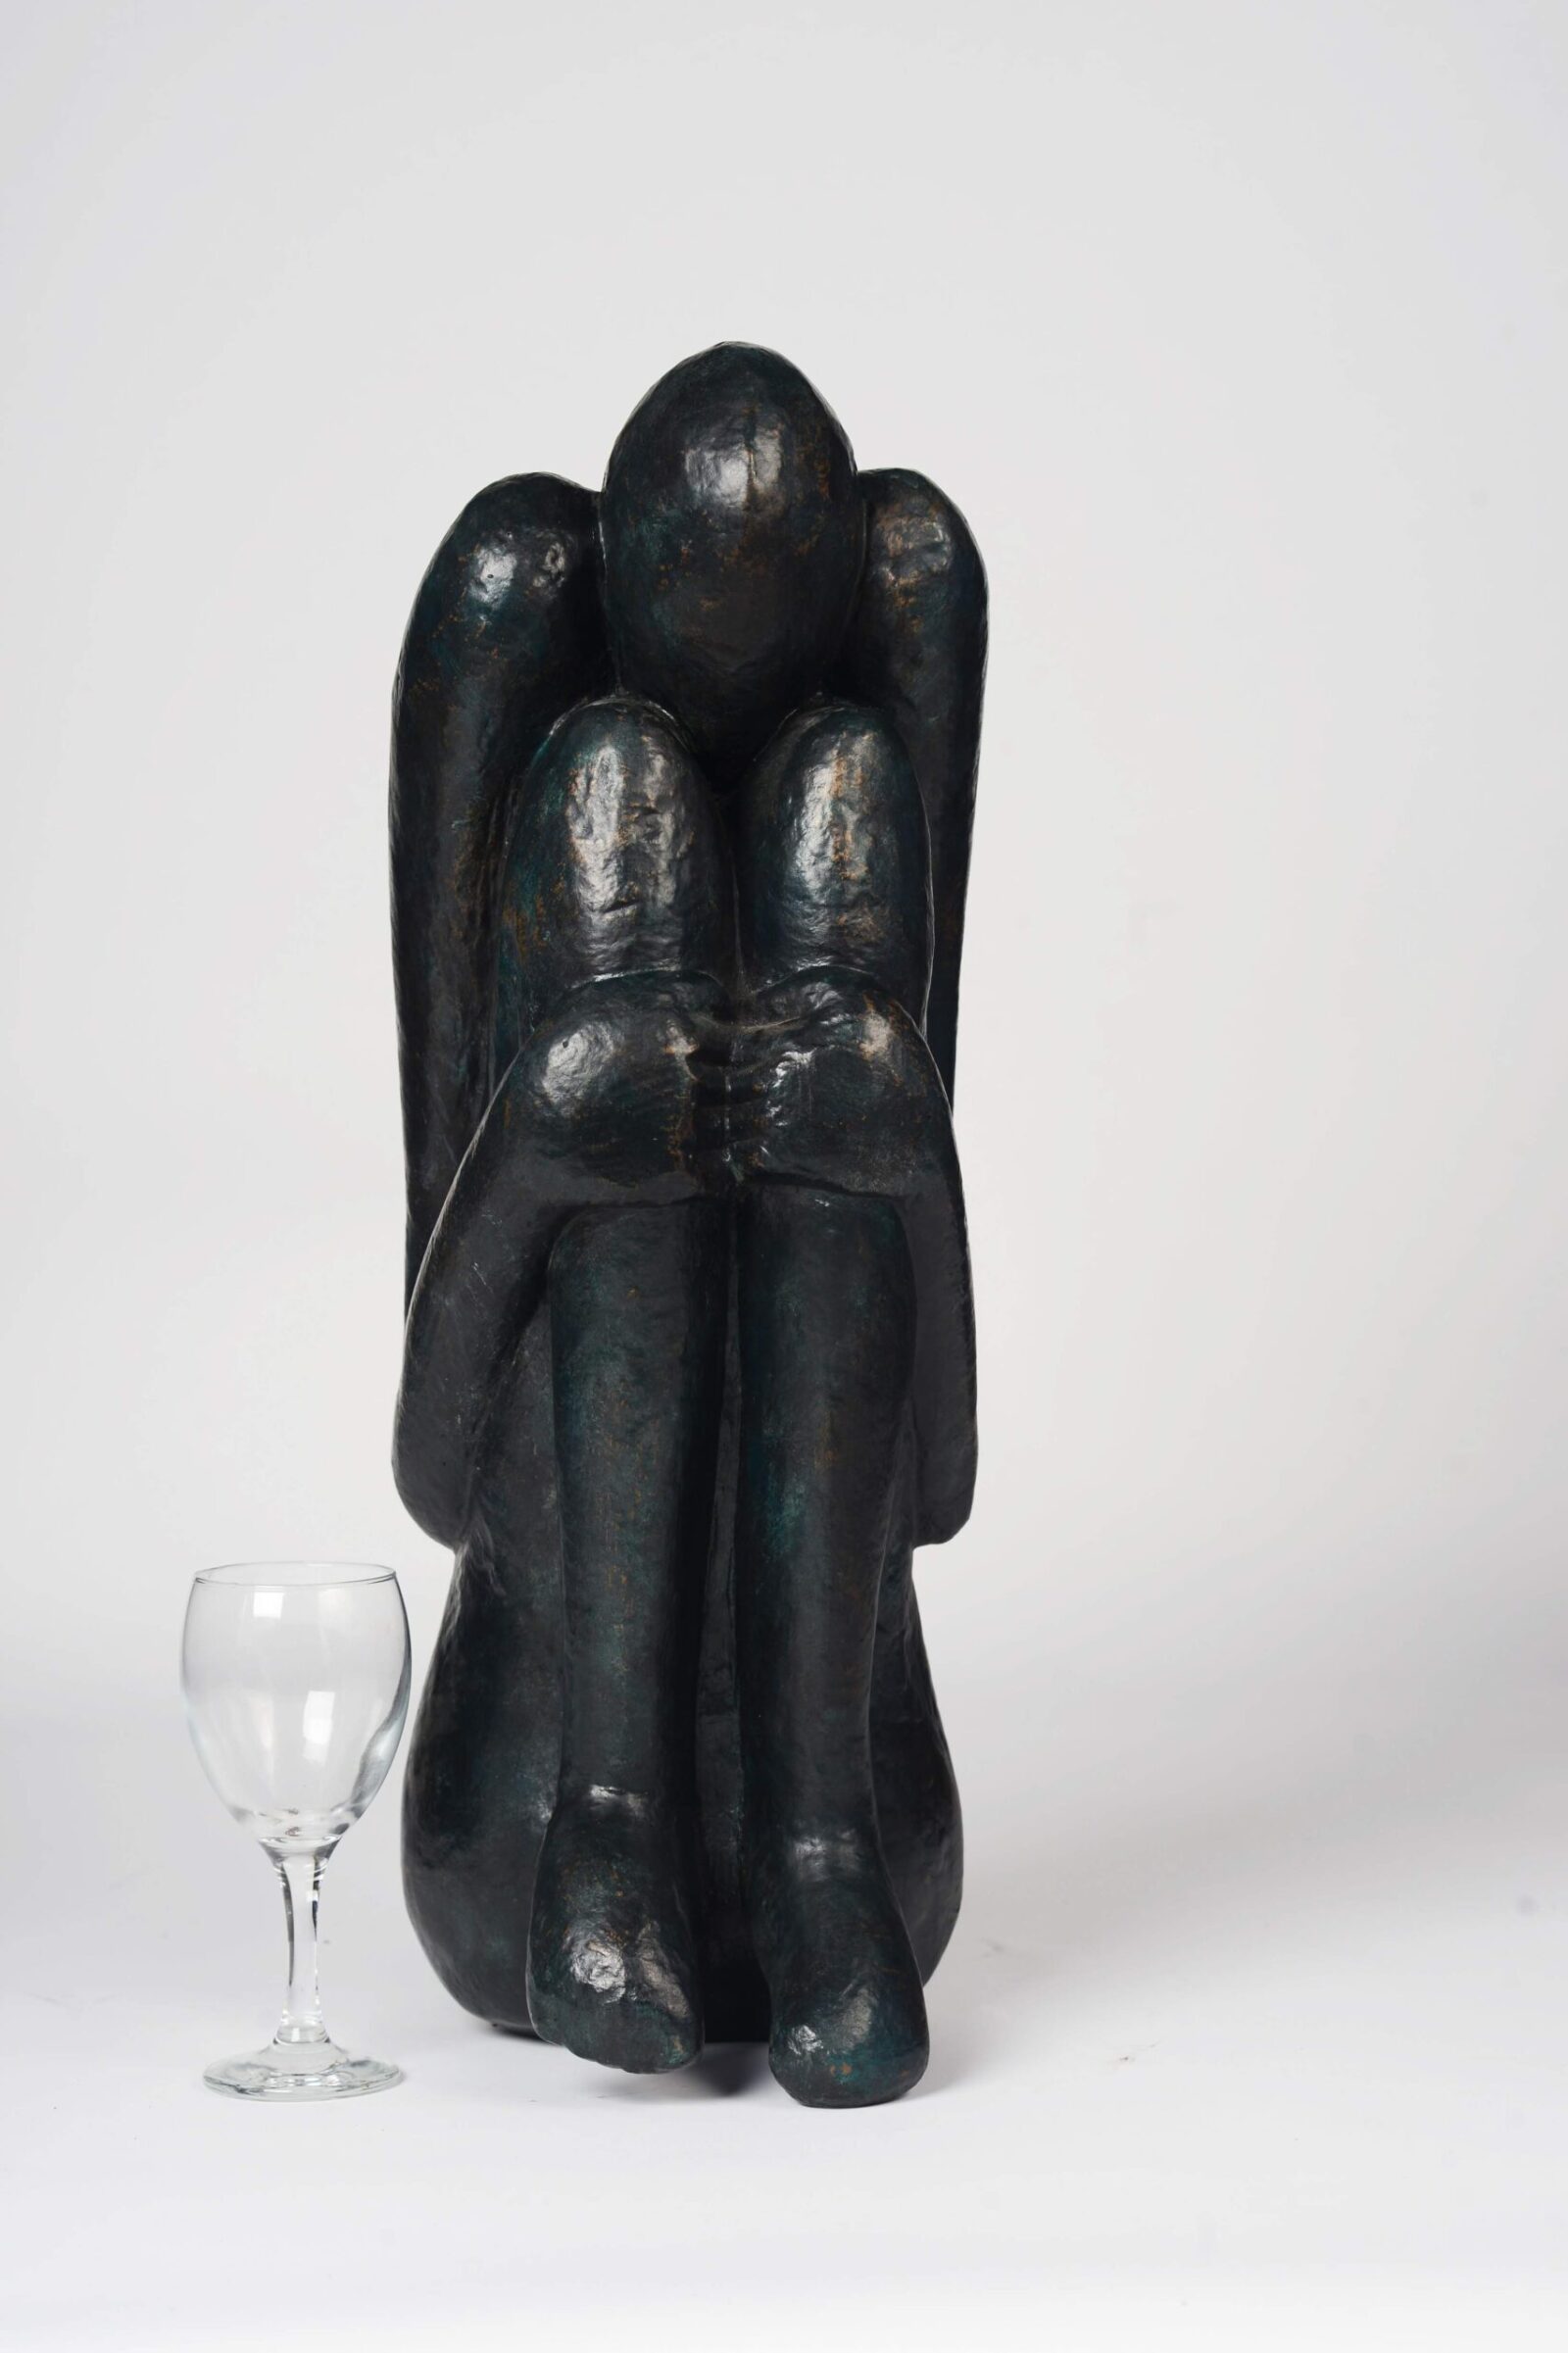 modern bronze sculpture for interior design based on a squatting figure